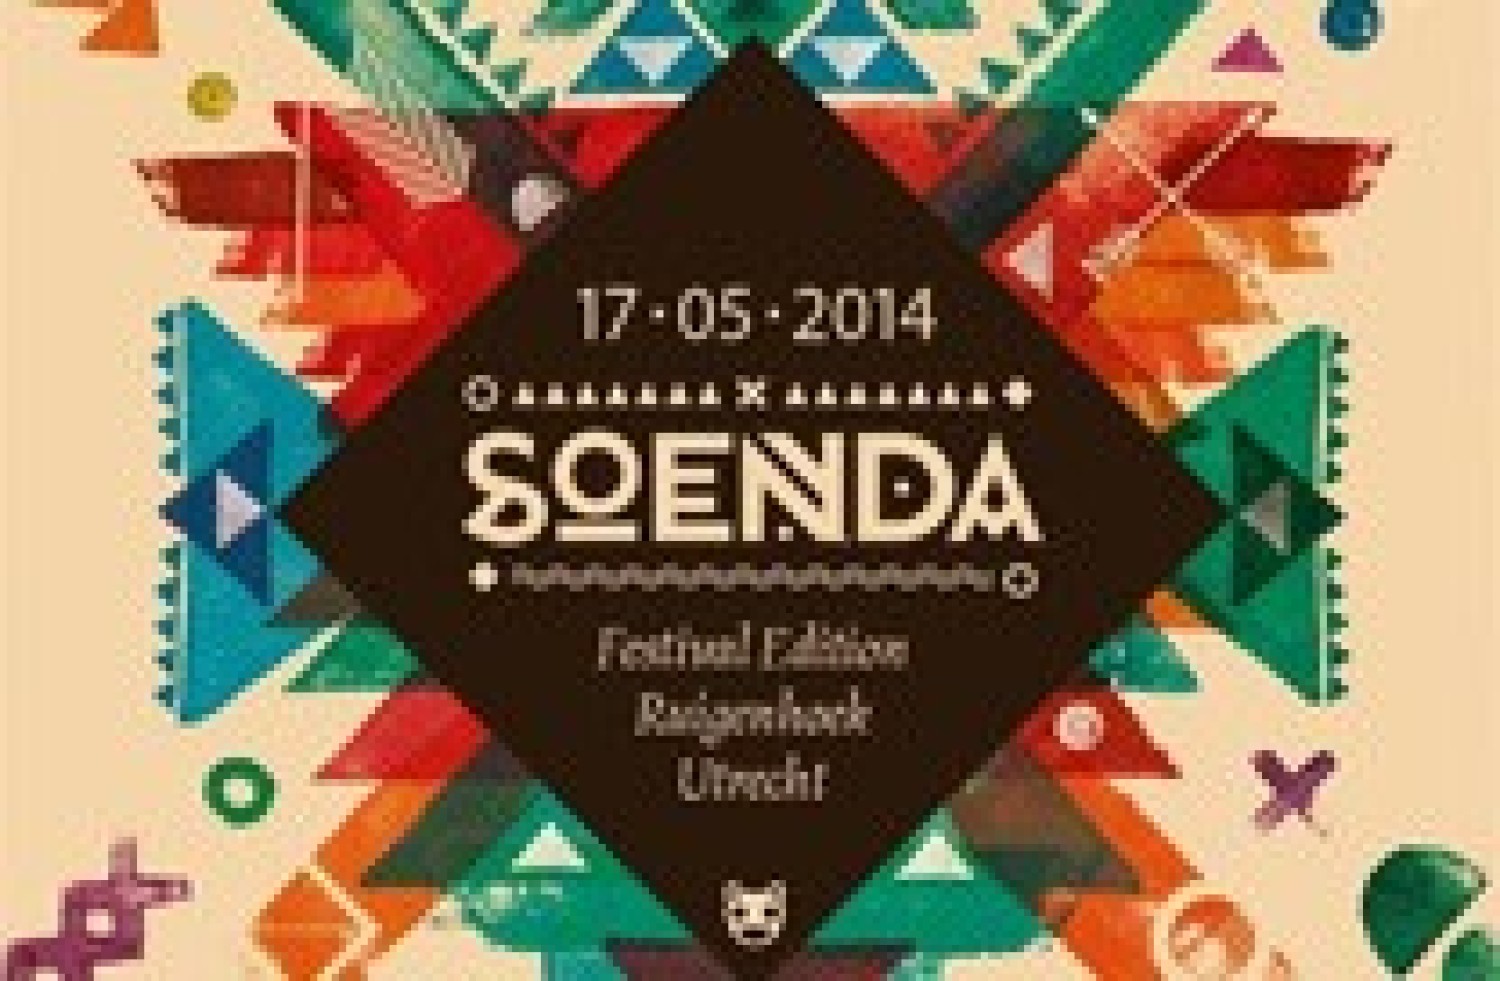 Party report: Soenda Festival 2014, Utrecht (17-05-2014)